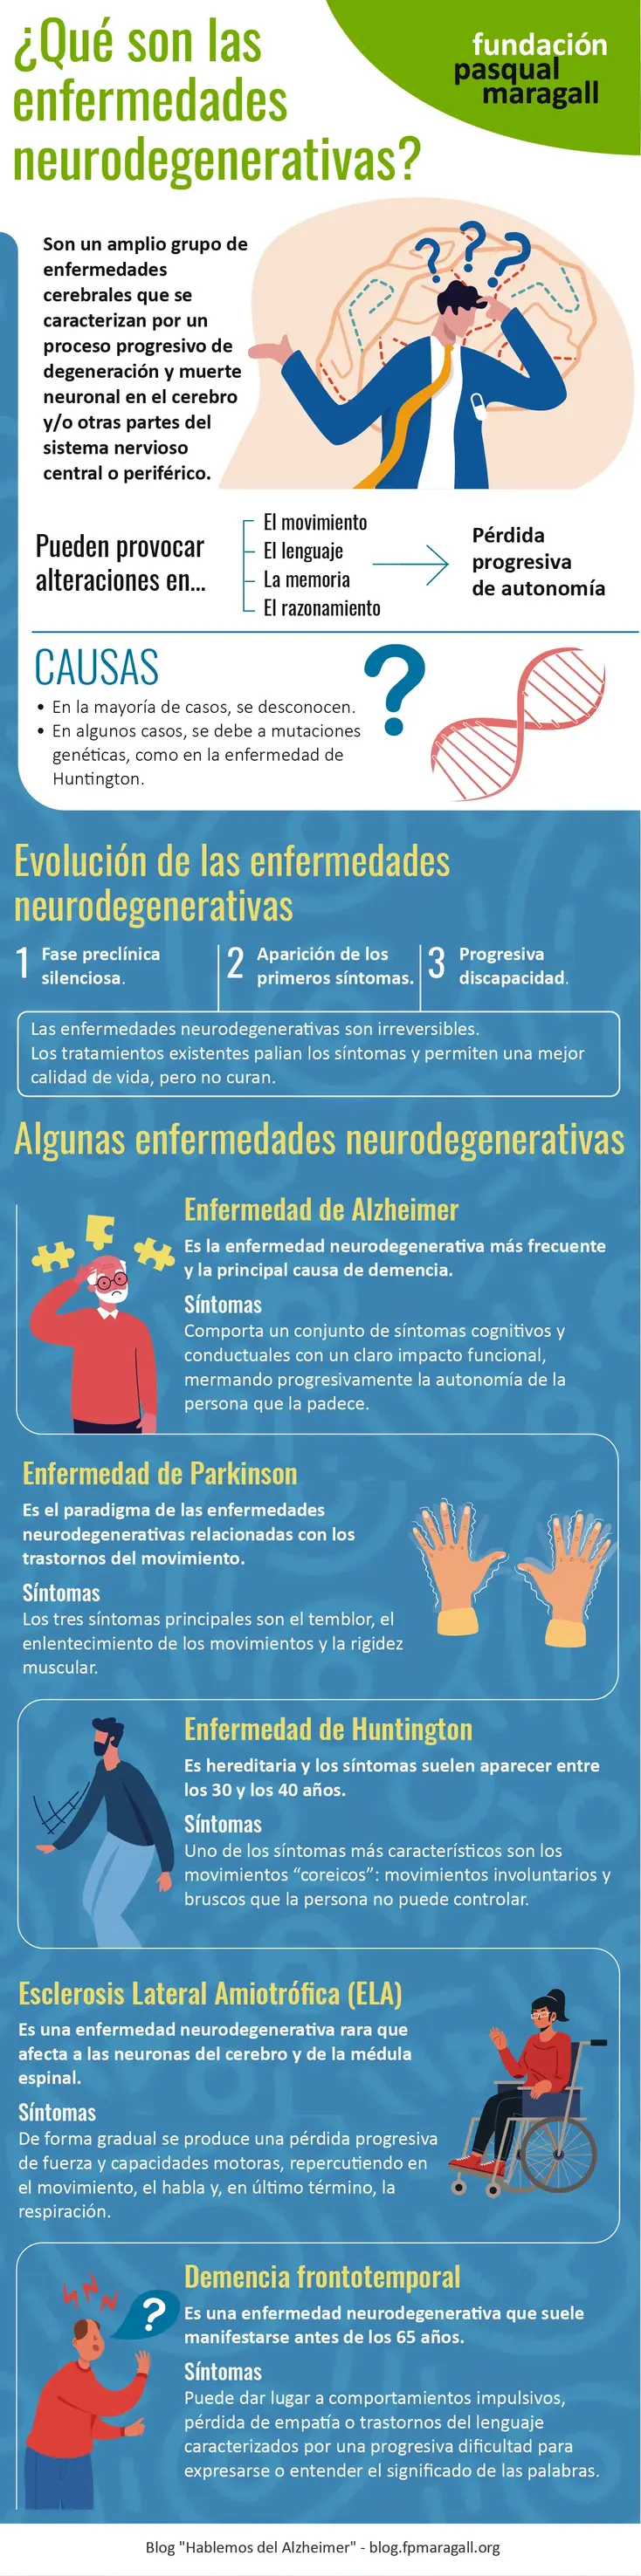 FPM - 20211108 - Enfermedades neurodegenerativas